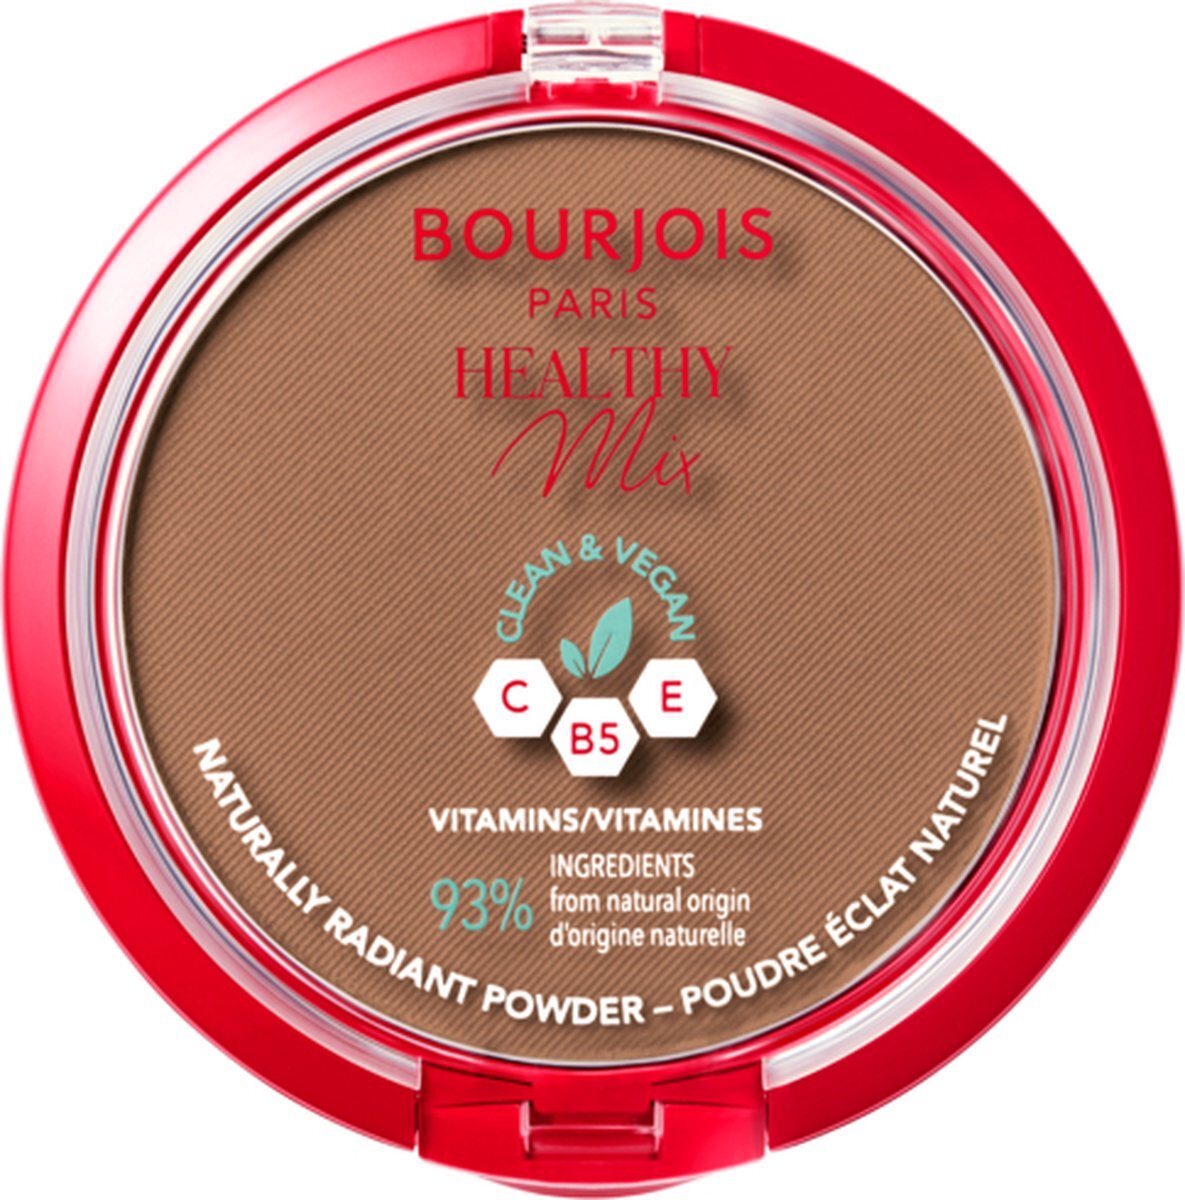 BOURJOIS PARIS Paris Healthy Mix 008 Poeder